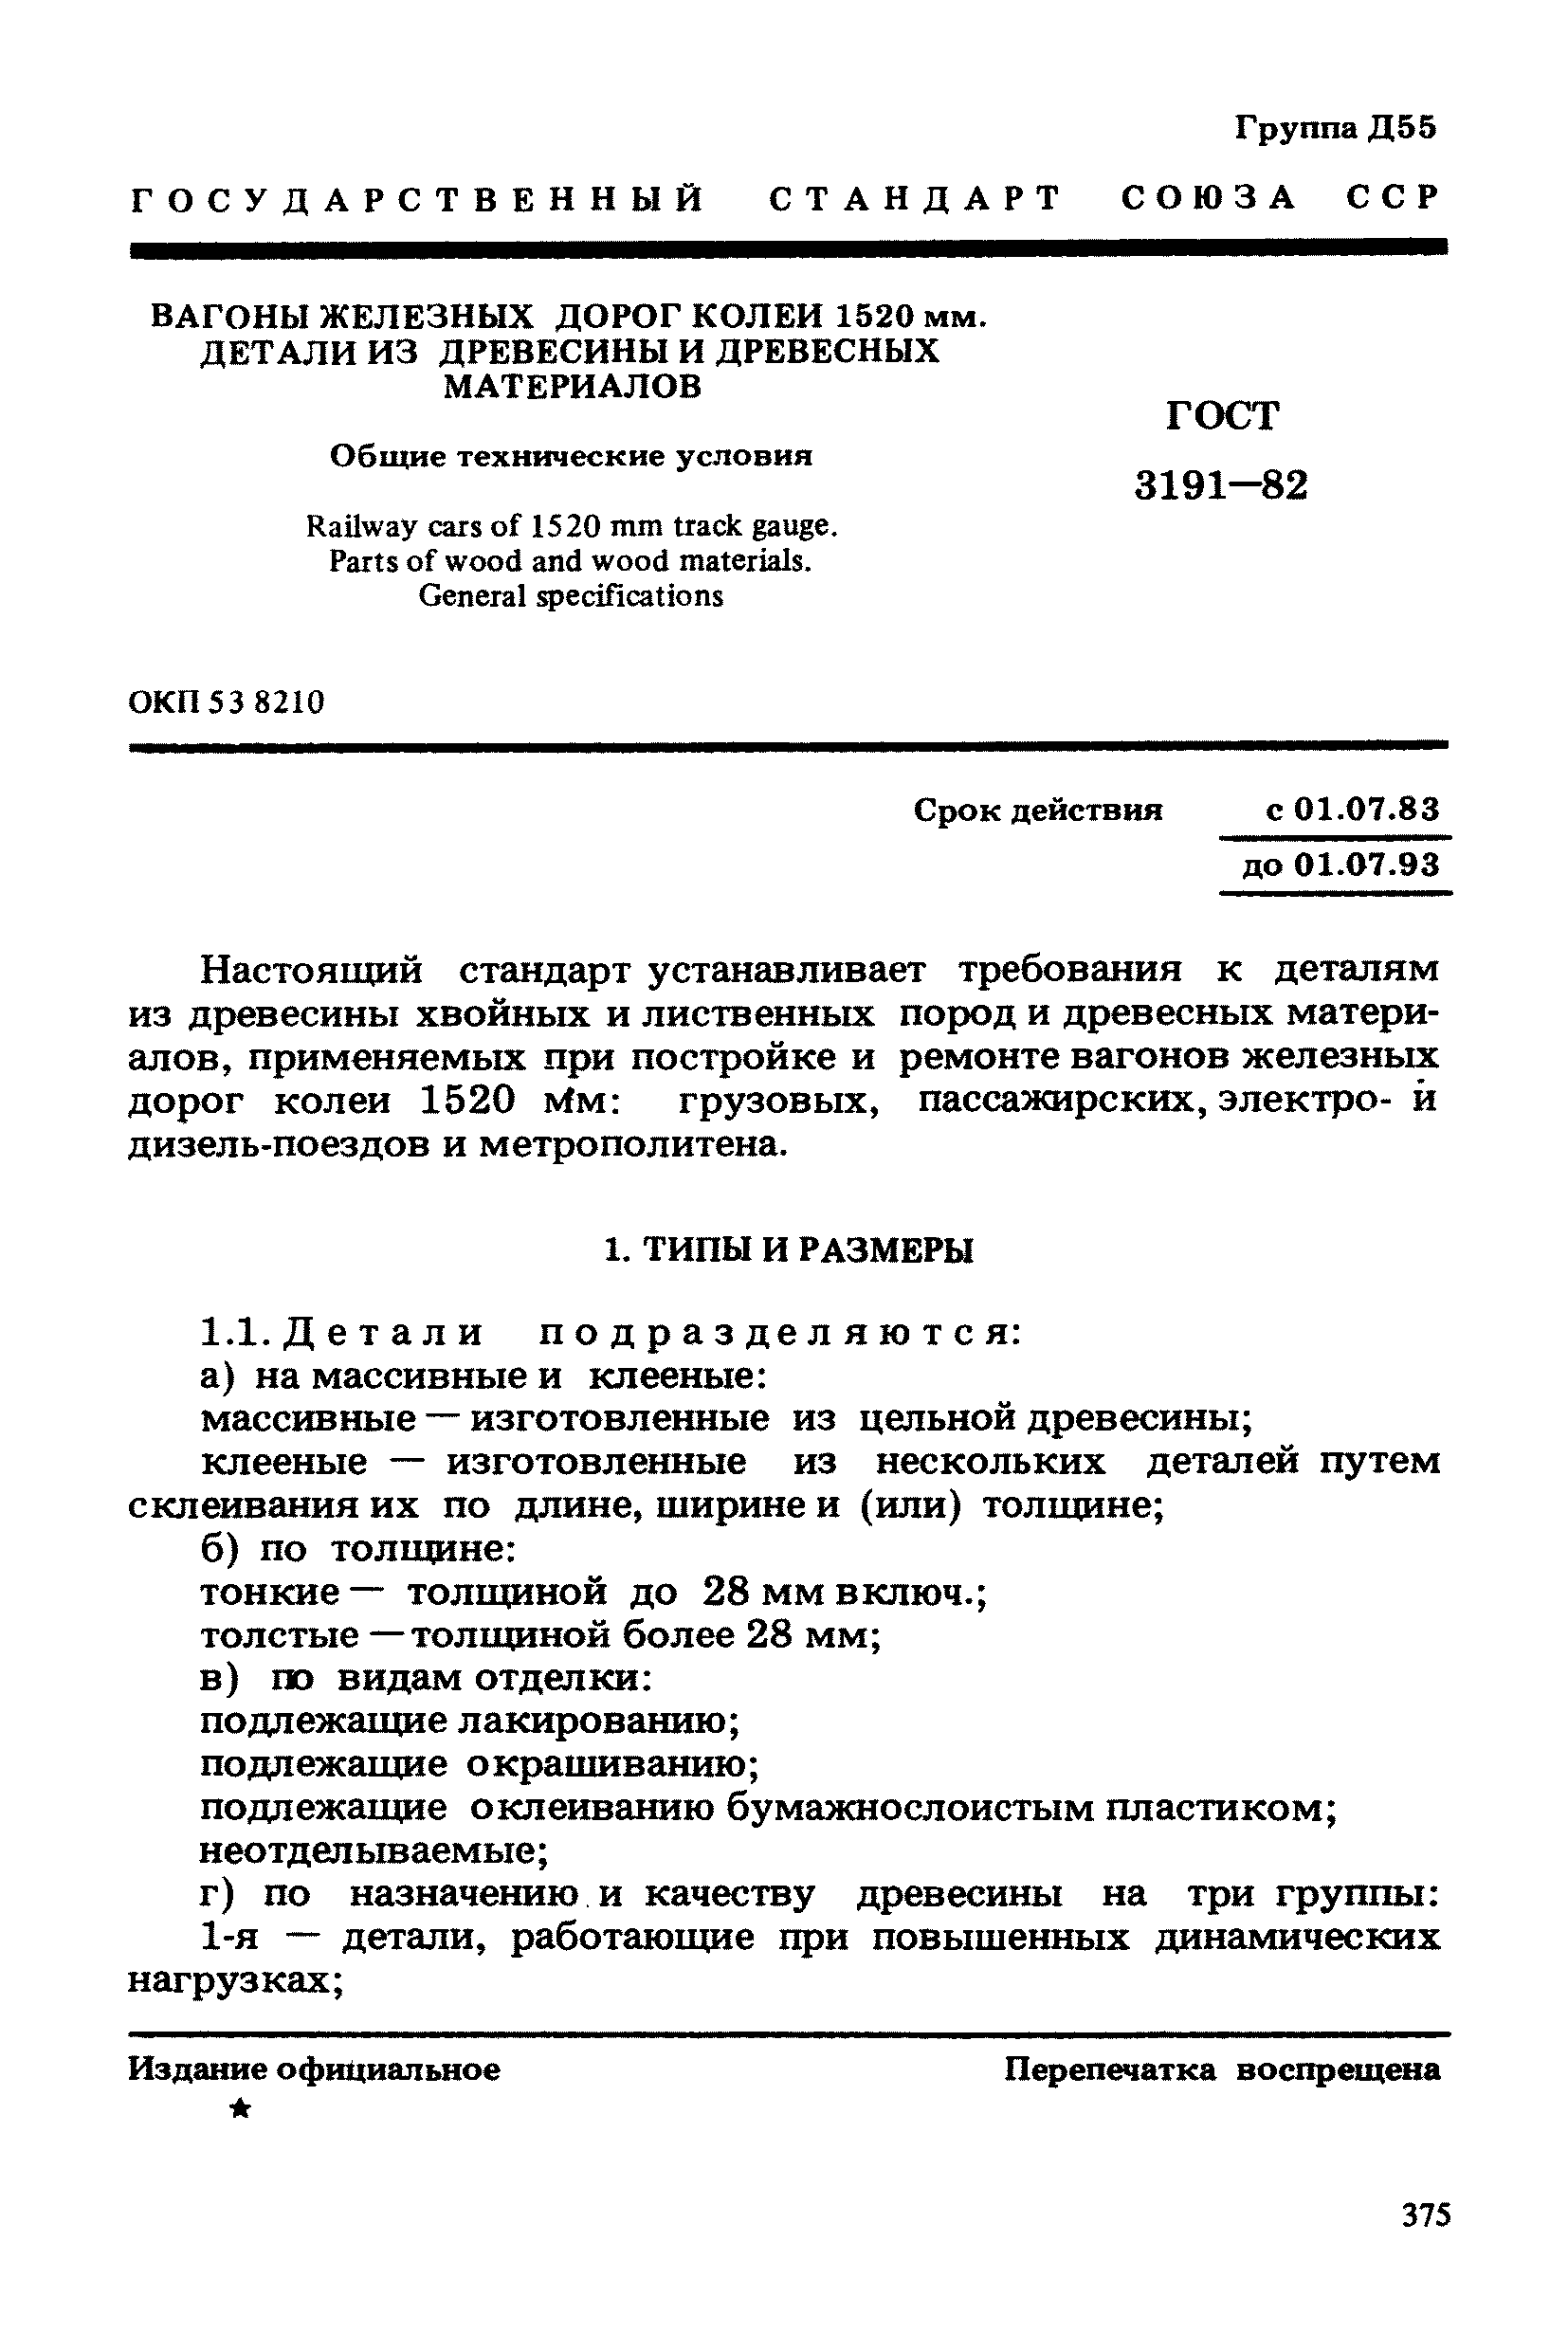 ГОСТ 3191-82